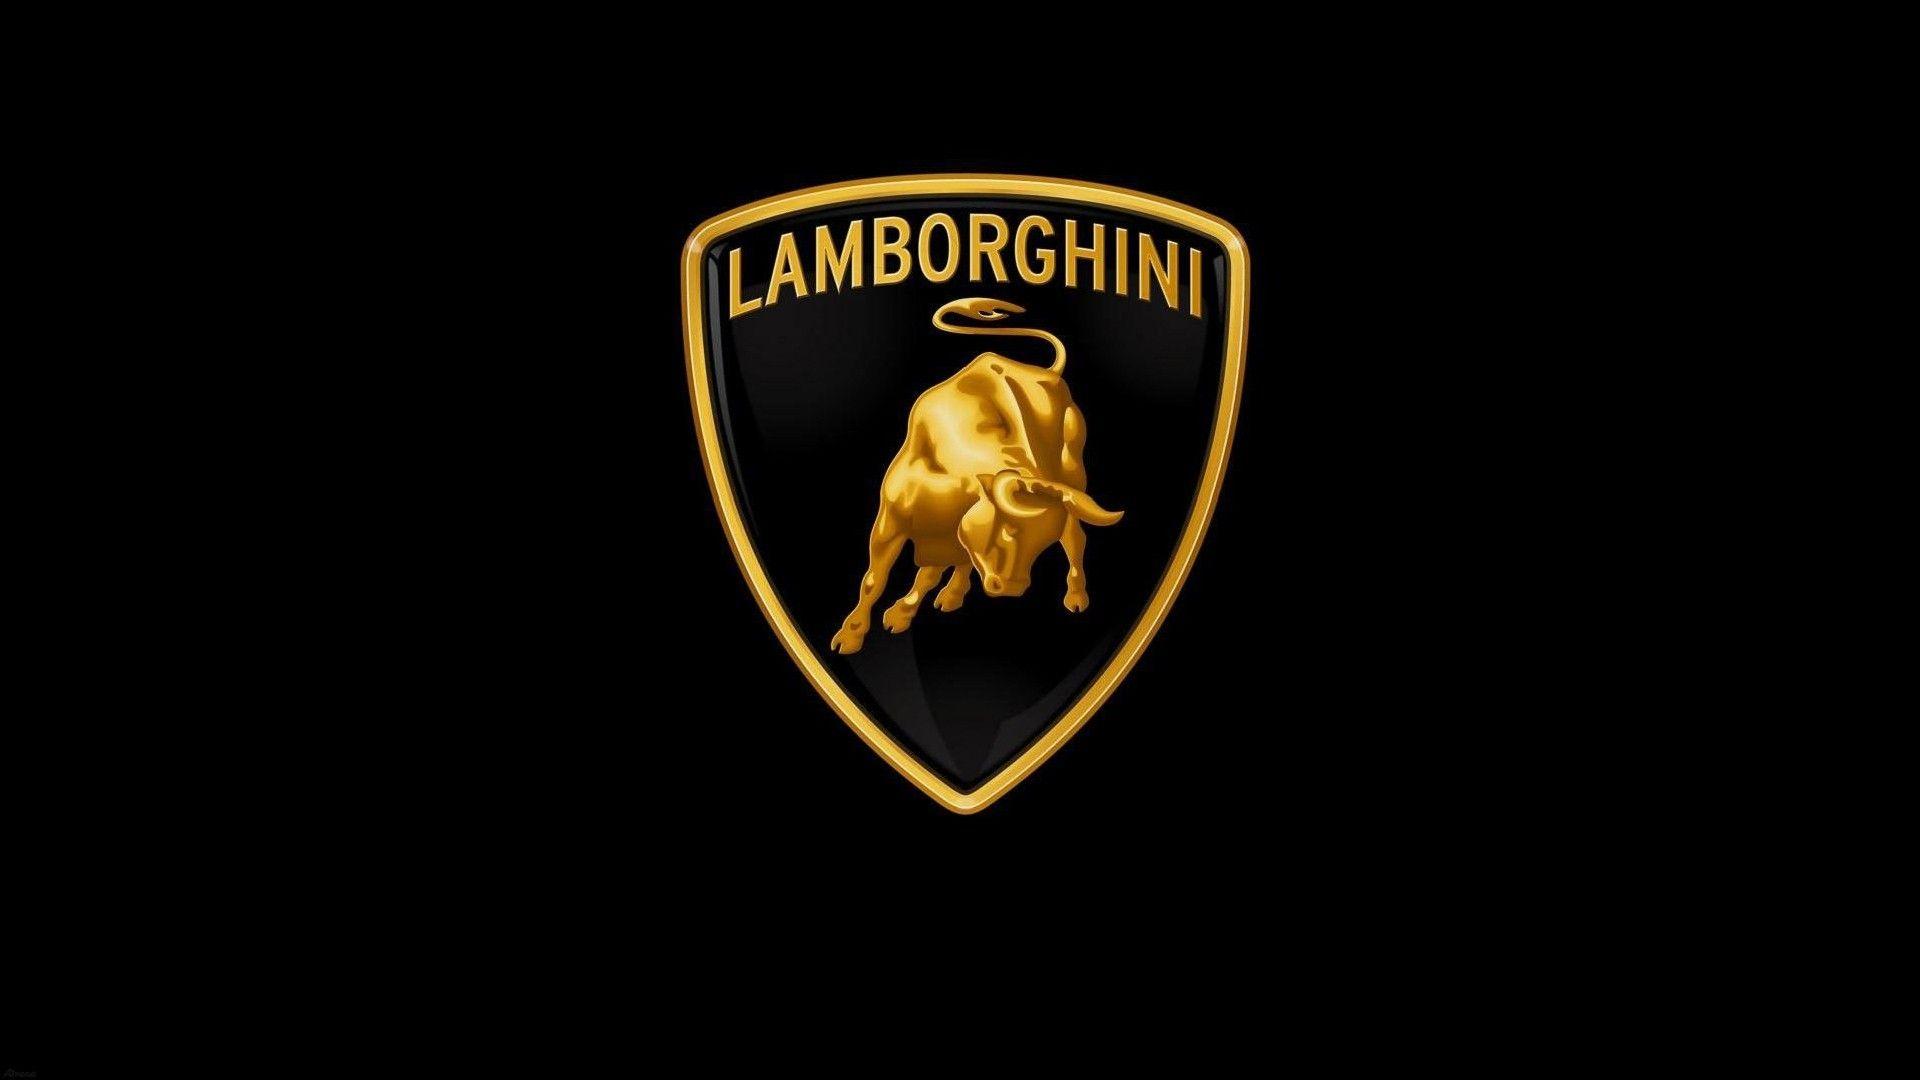 Italian Luxury Car Logo - Lamborghini Italian Brand and Manufacturer of Luxury Cars Logo Image ...